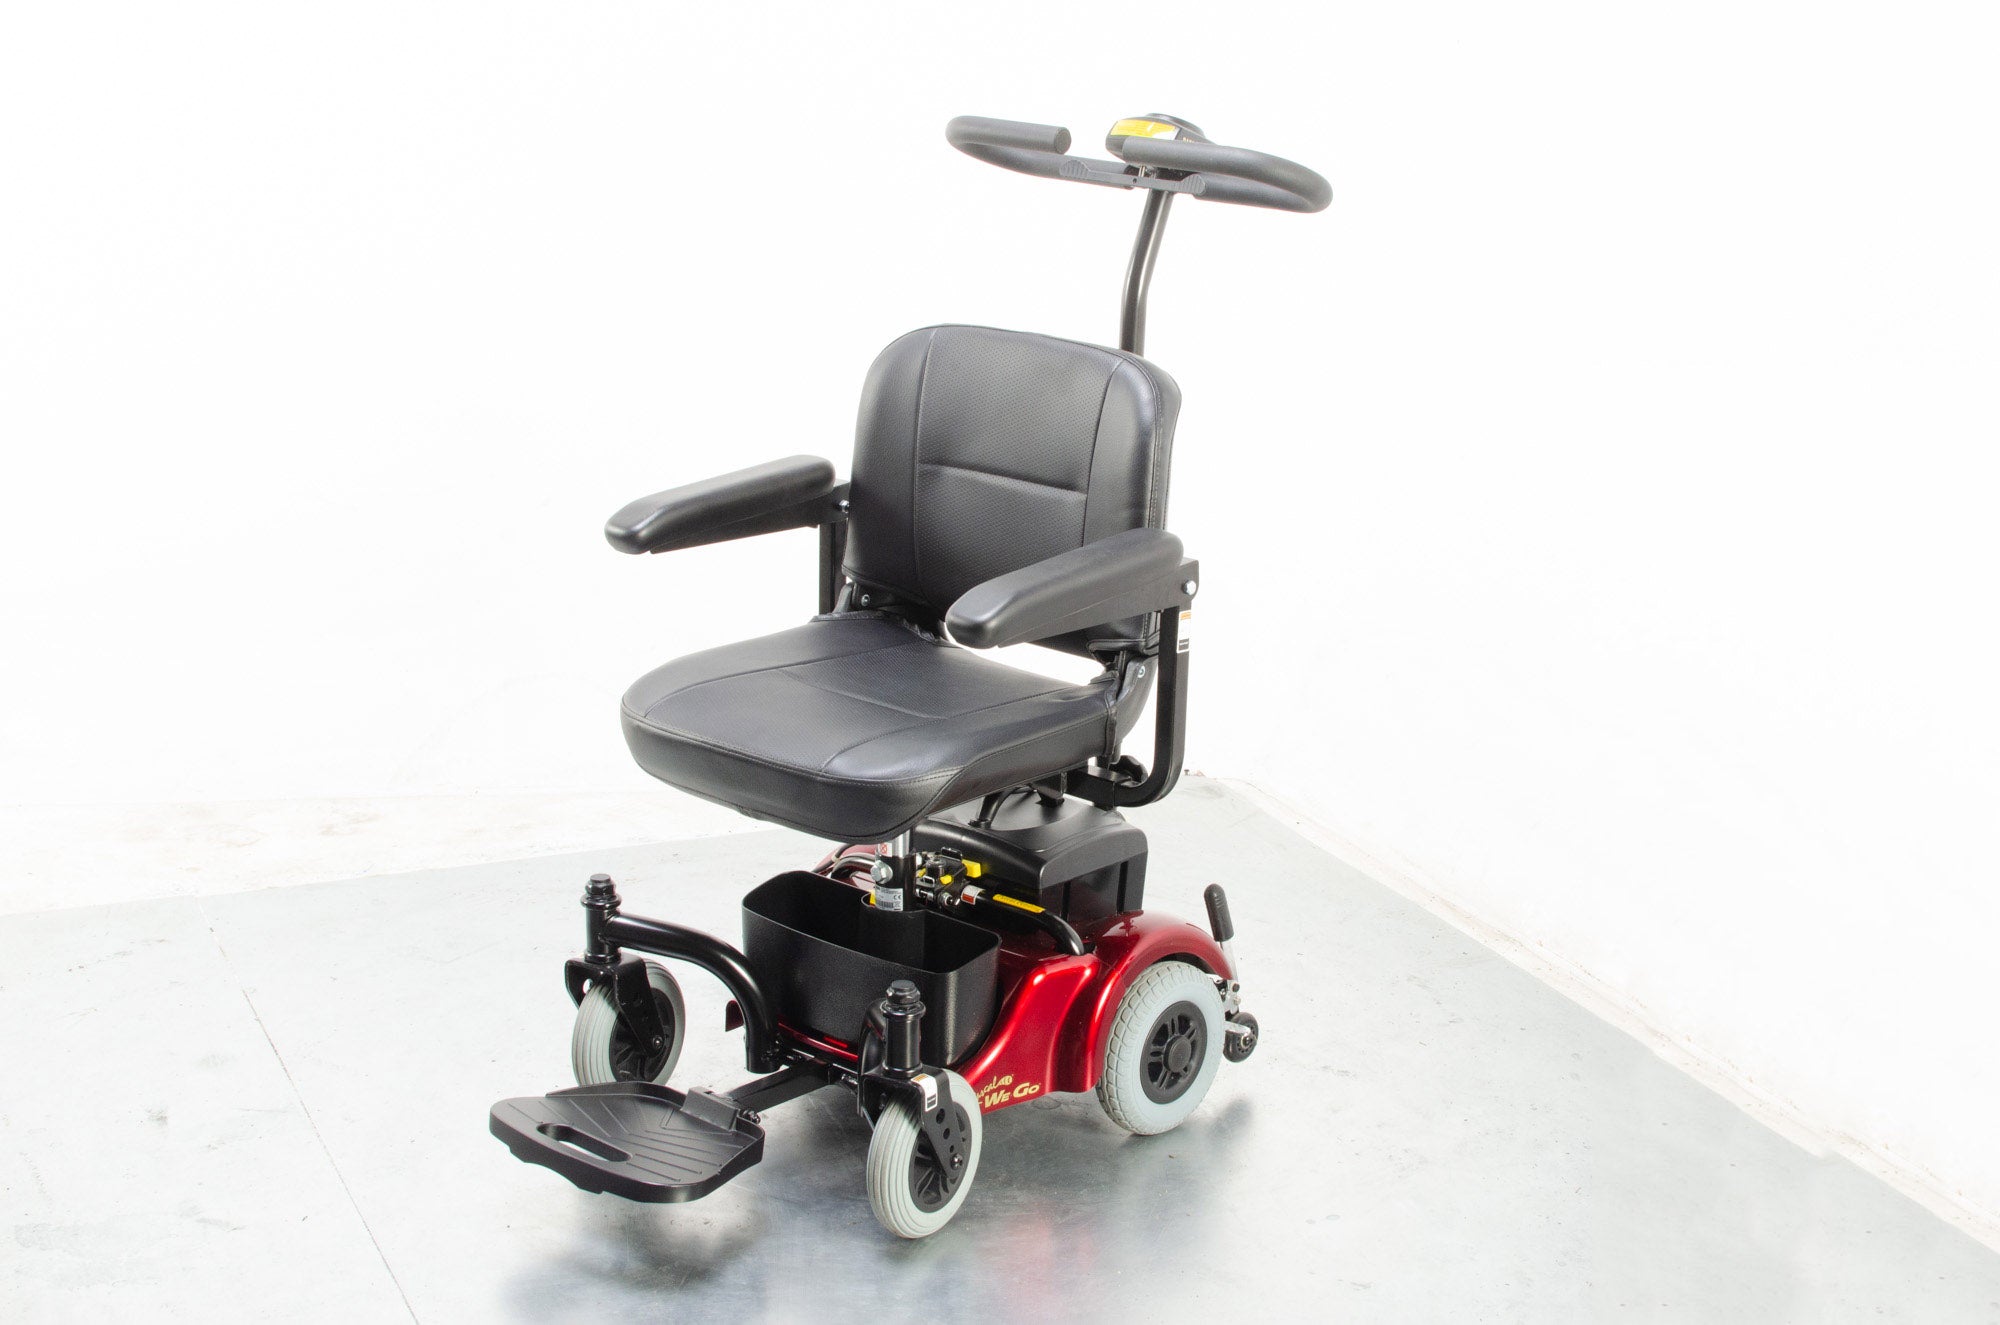 Rascal WeGo Electric Wheelchair Powerchair Attendant Controlled 4mph Unused